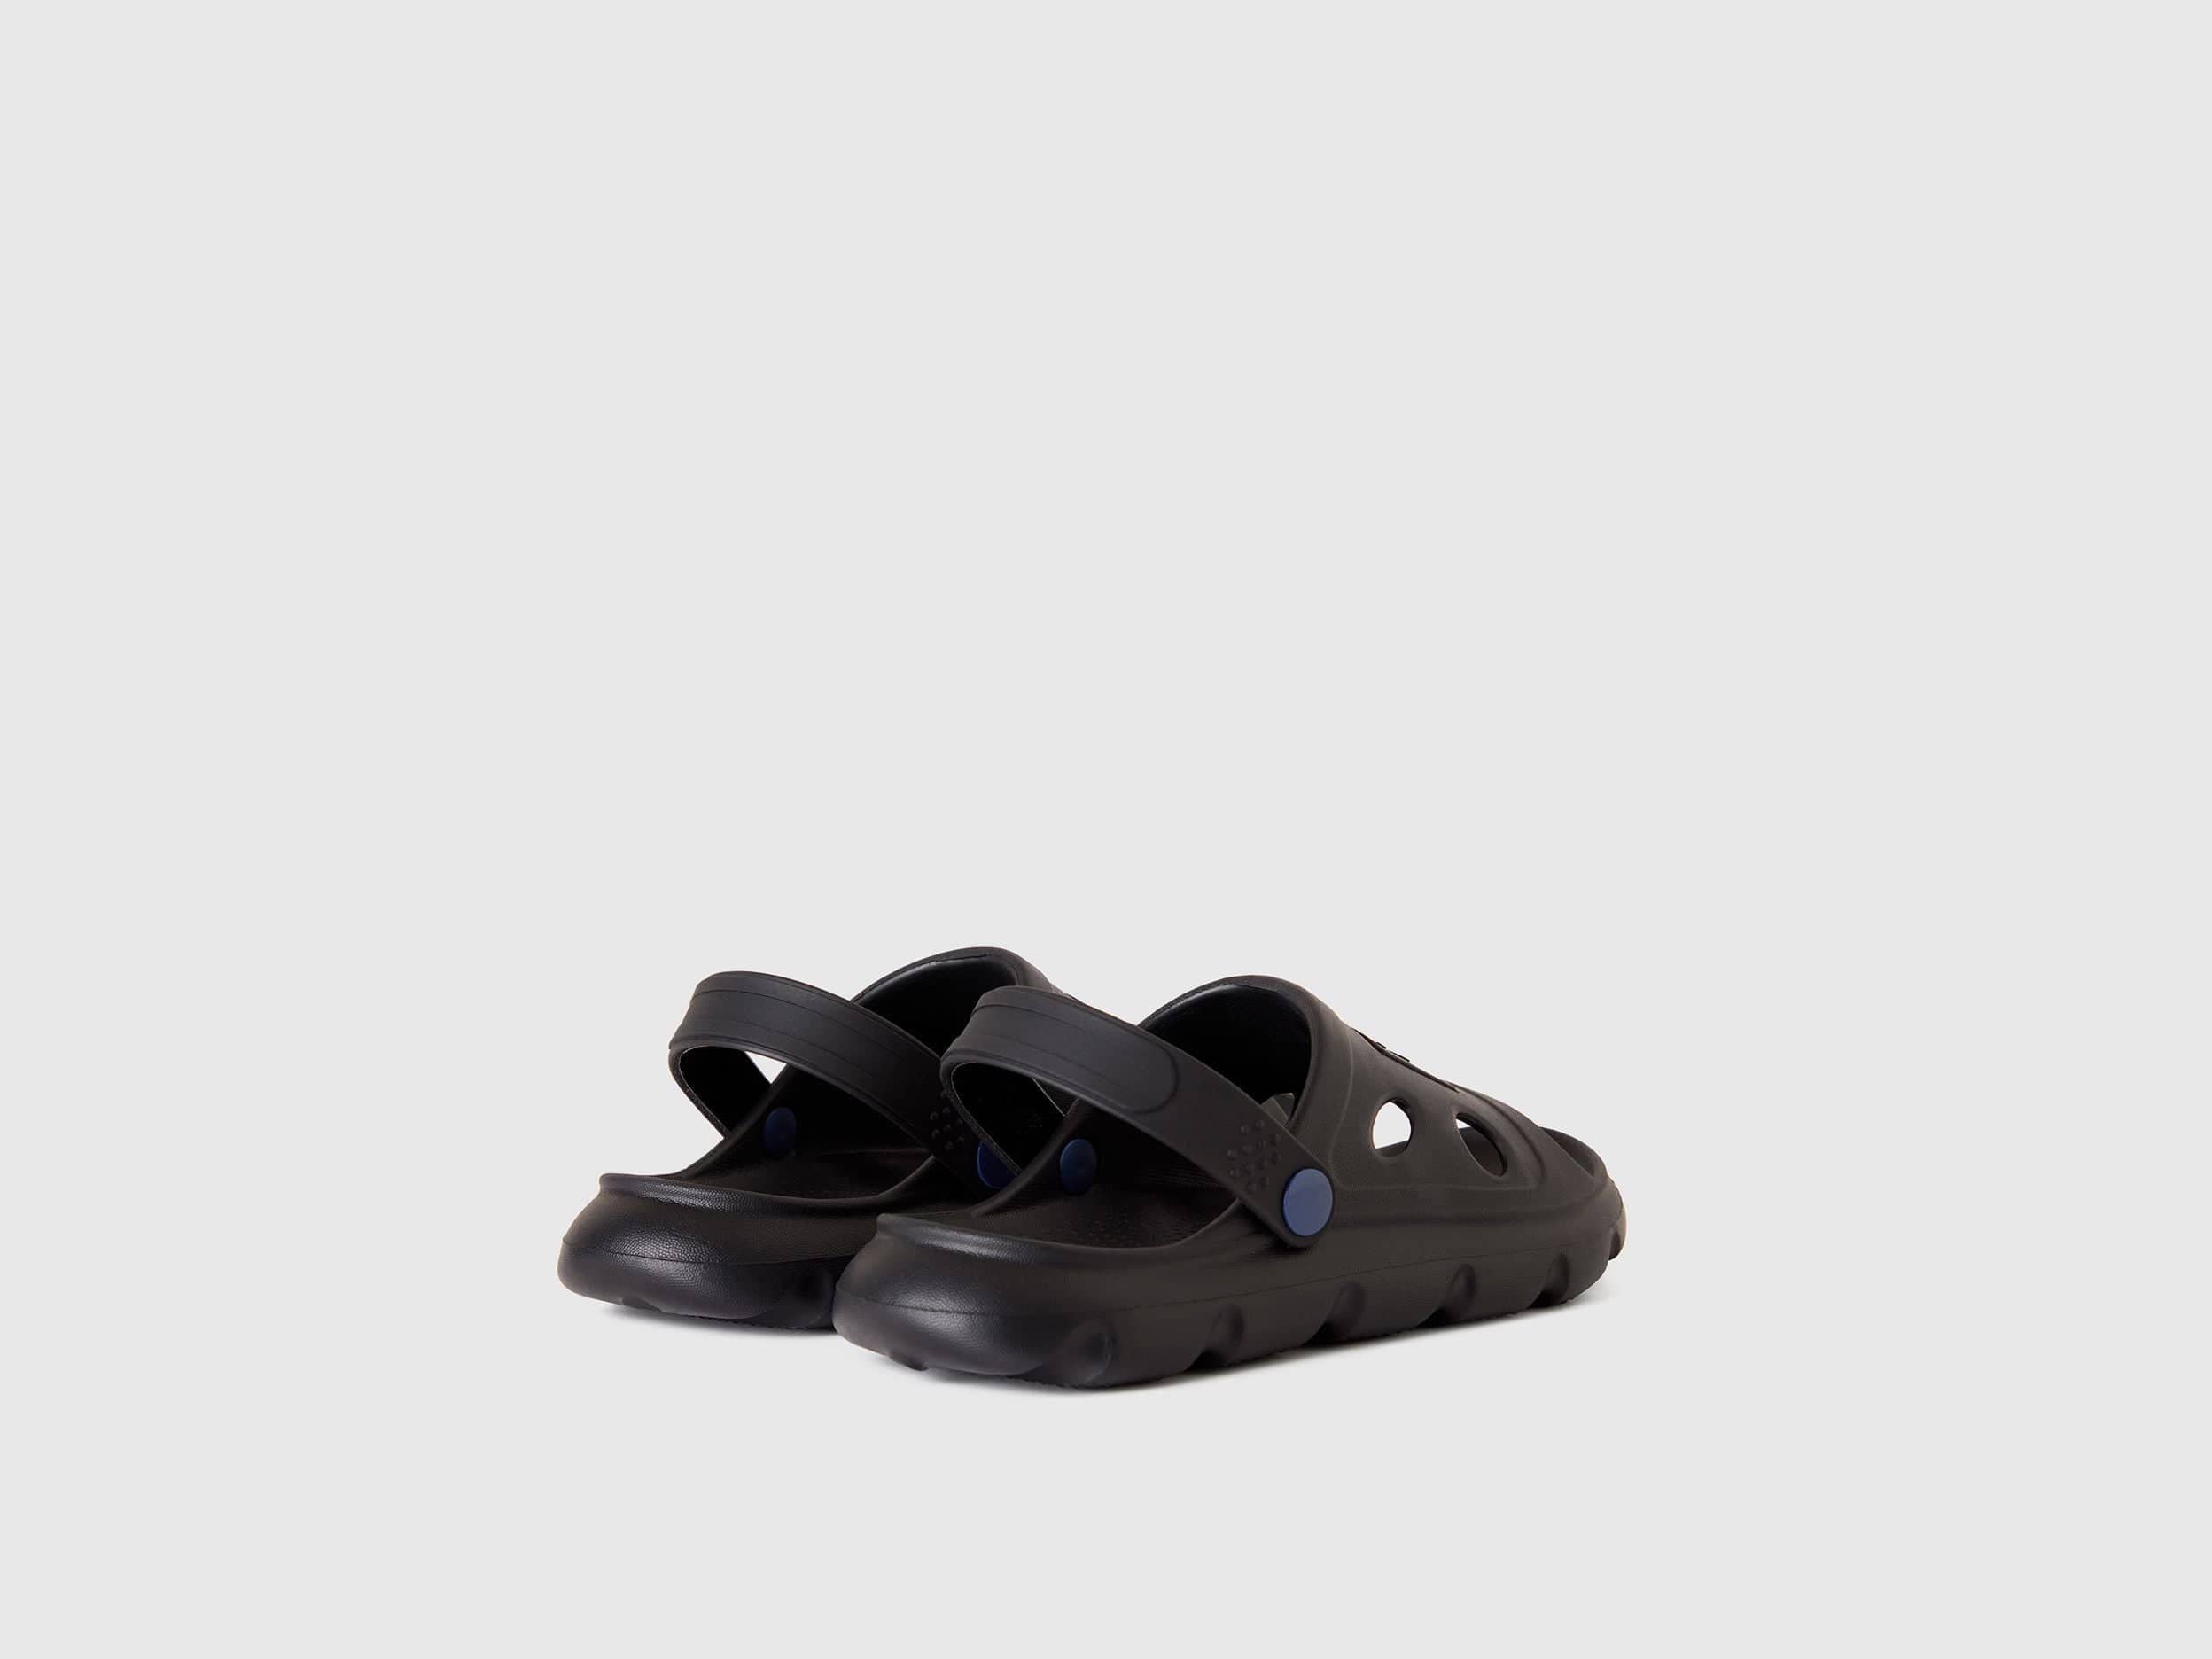 Sandals in lightweight rubber